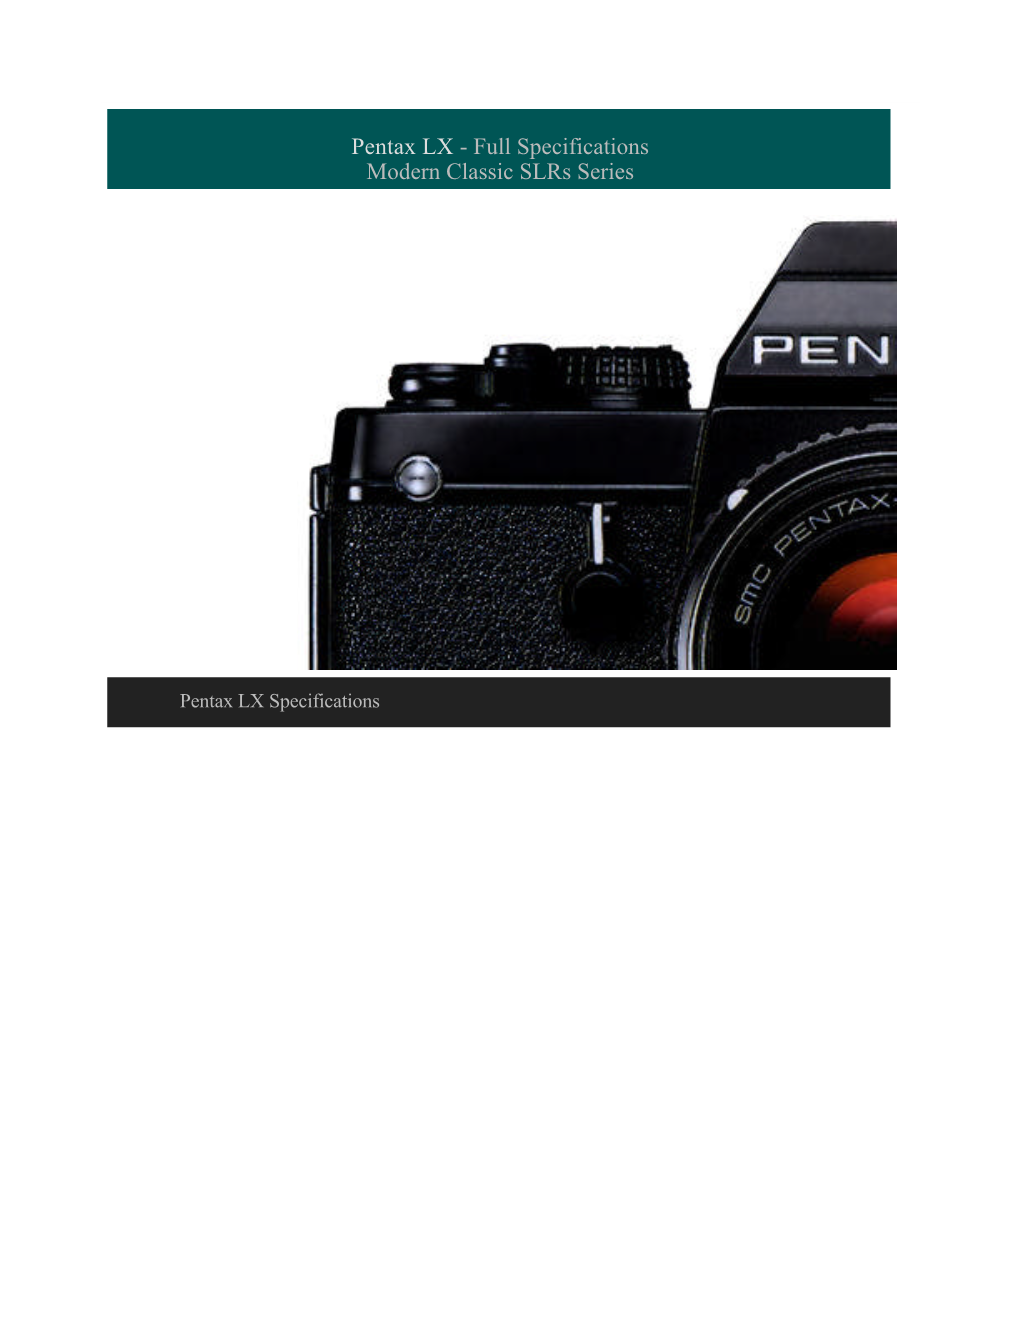 Pentax LX - Full Specifications Modern Classic Slrs Series